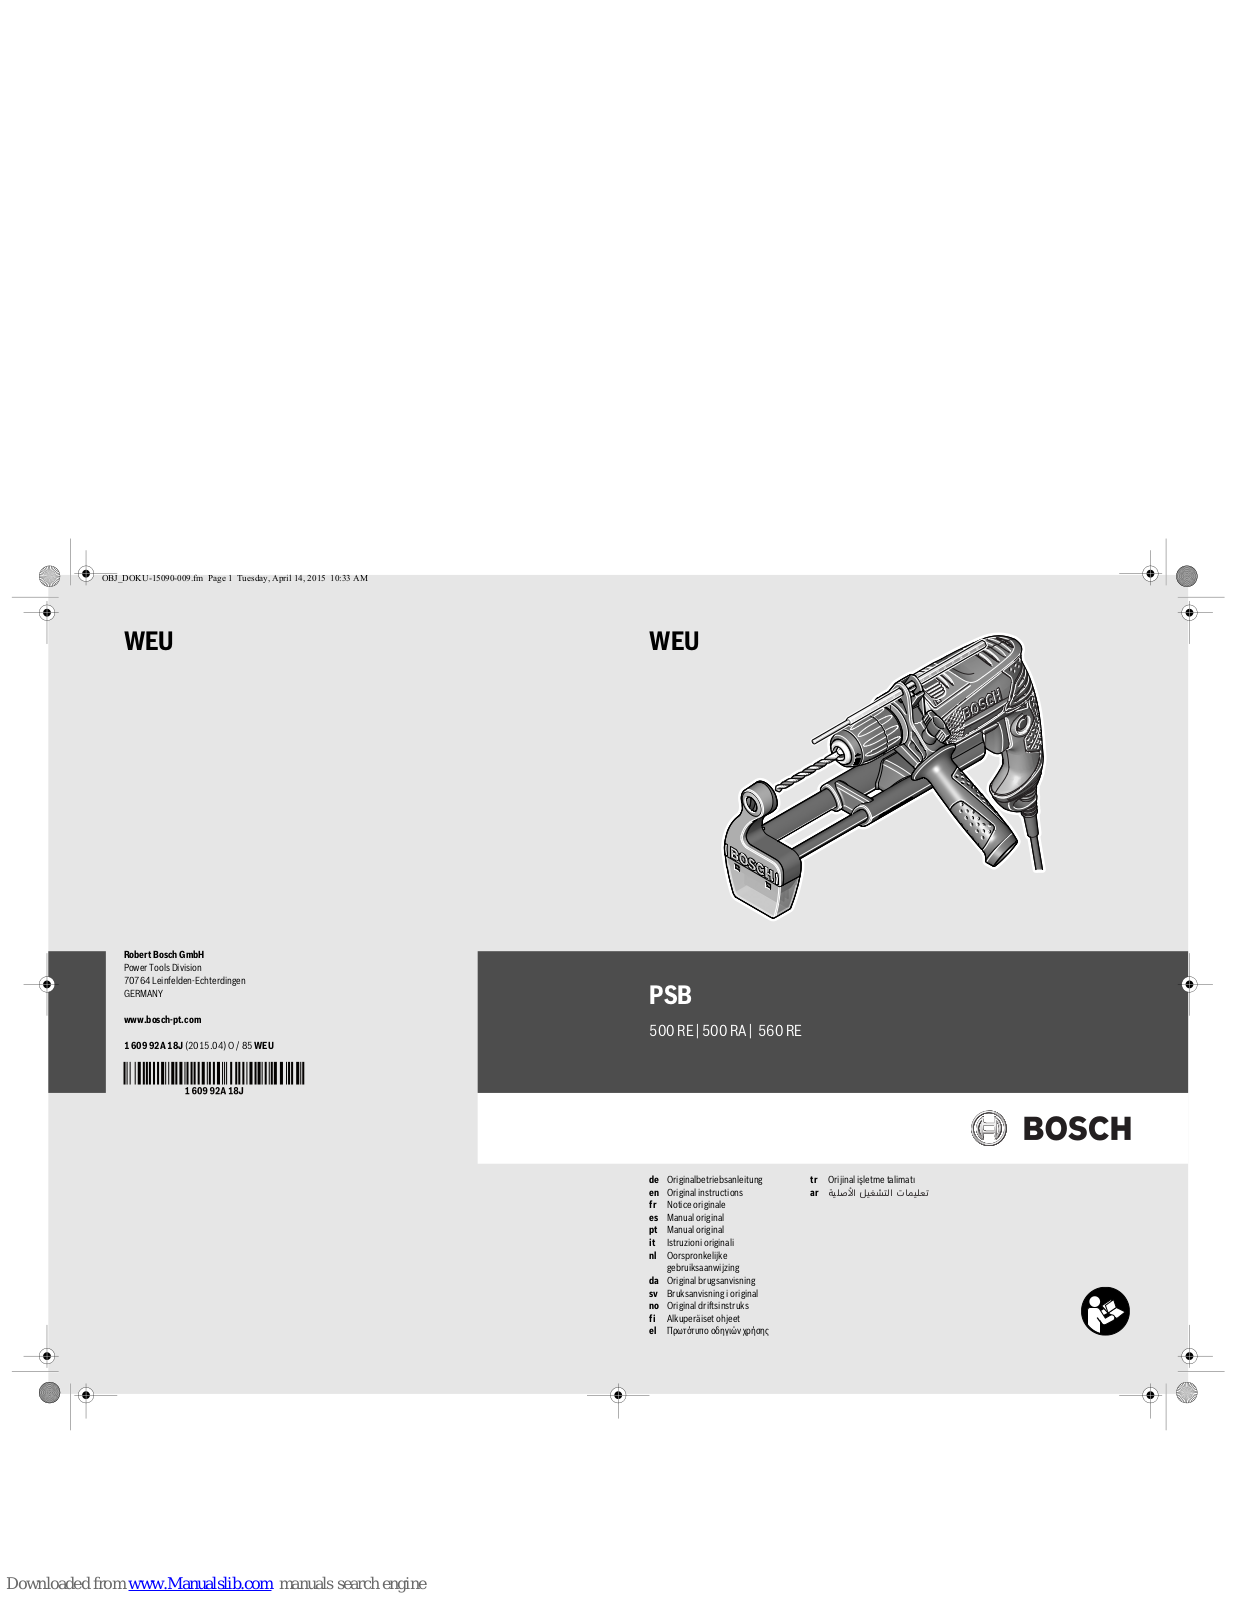 Bosch PSB 500 RE, PSB 500 RA, PSB 560 RE Original Instructions Manual